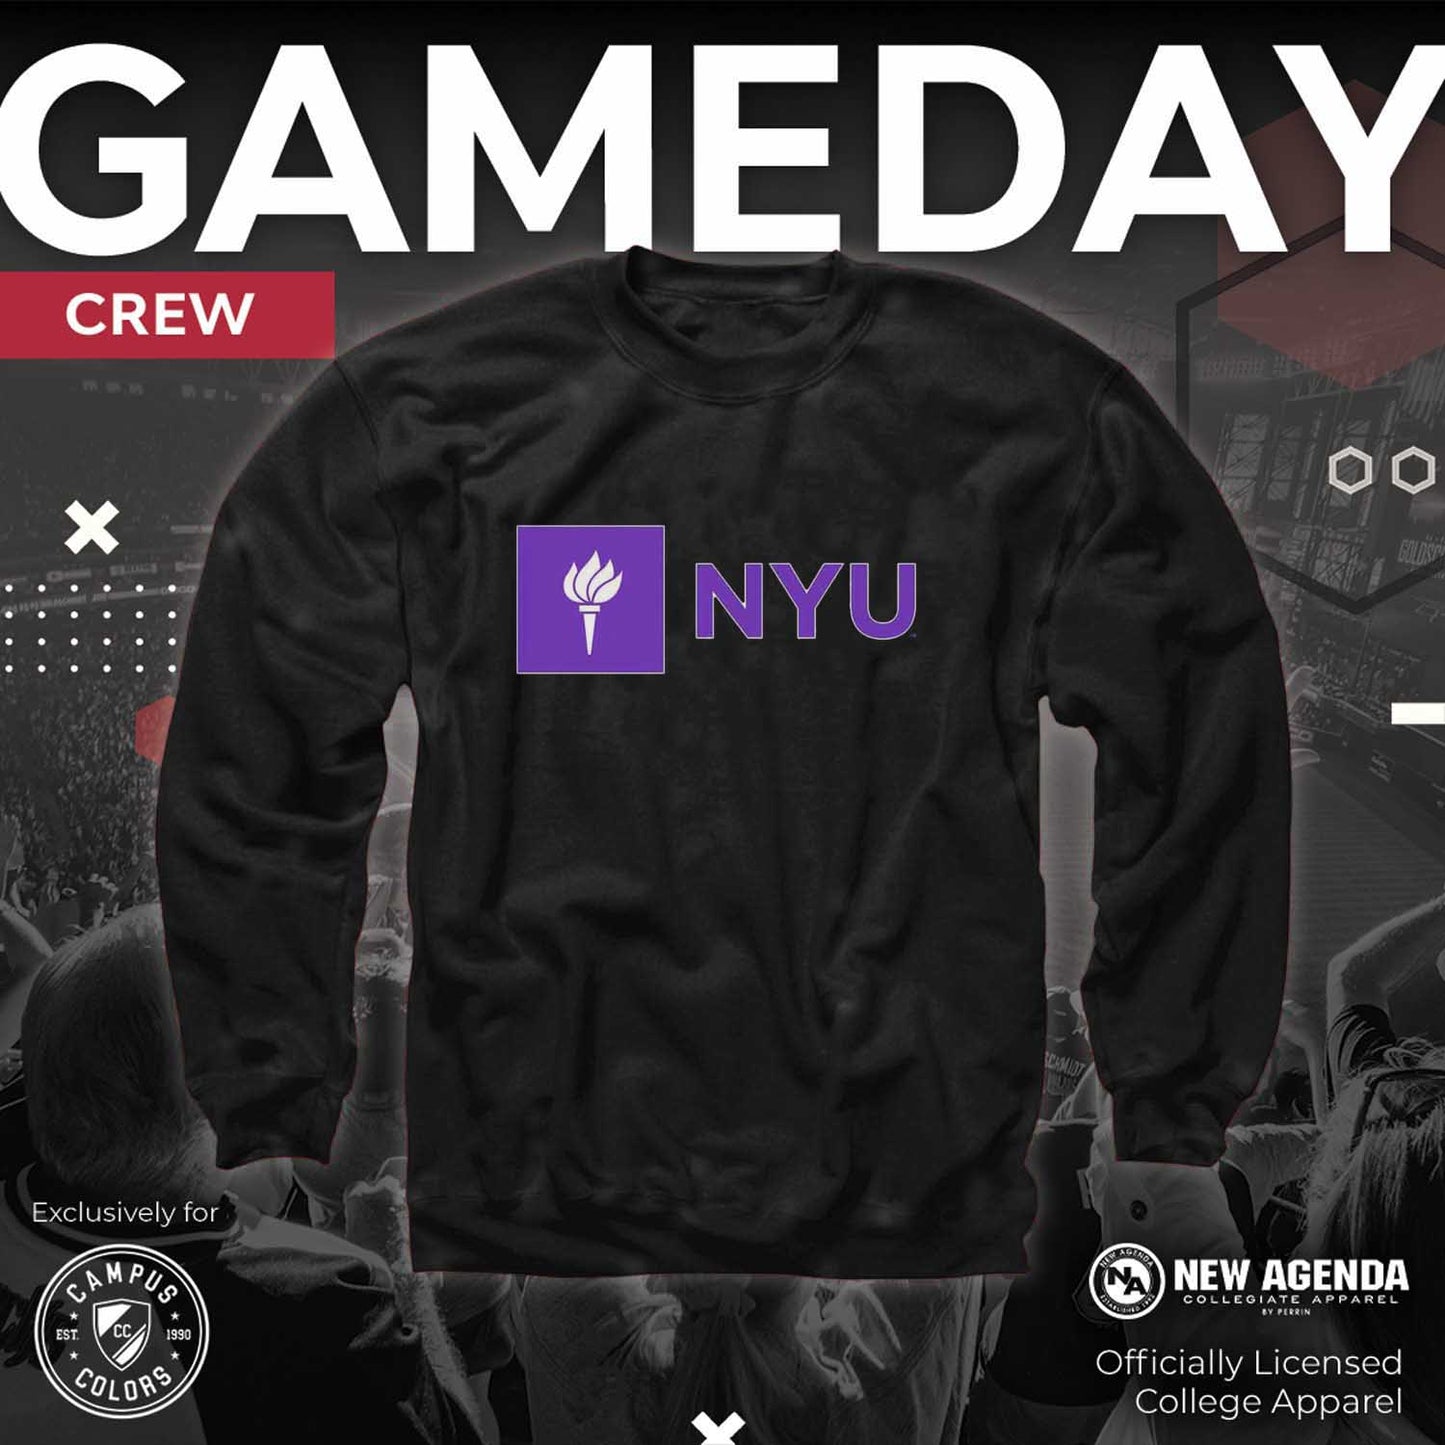 NYU Violets Campus Colors Adult Arch & Logo Soft Style Gameday Crewneck Sweatshirt  - Black